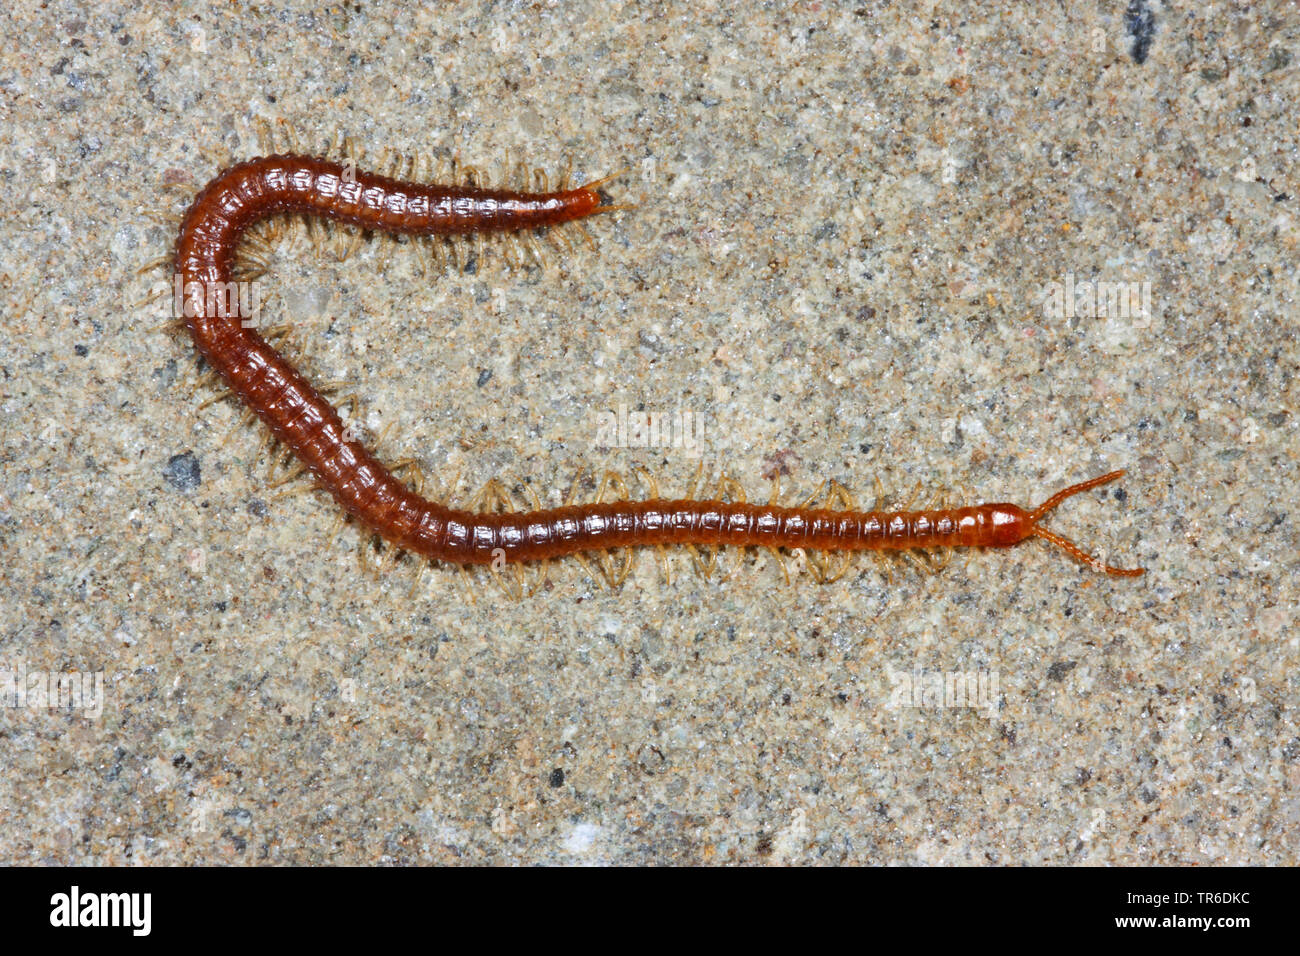 centipede (Geophilus longicornis), on the ground, Germany Stock Photo